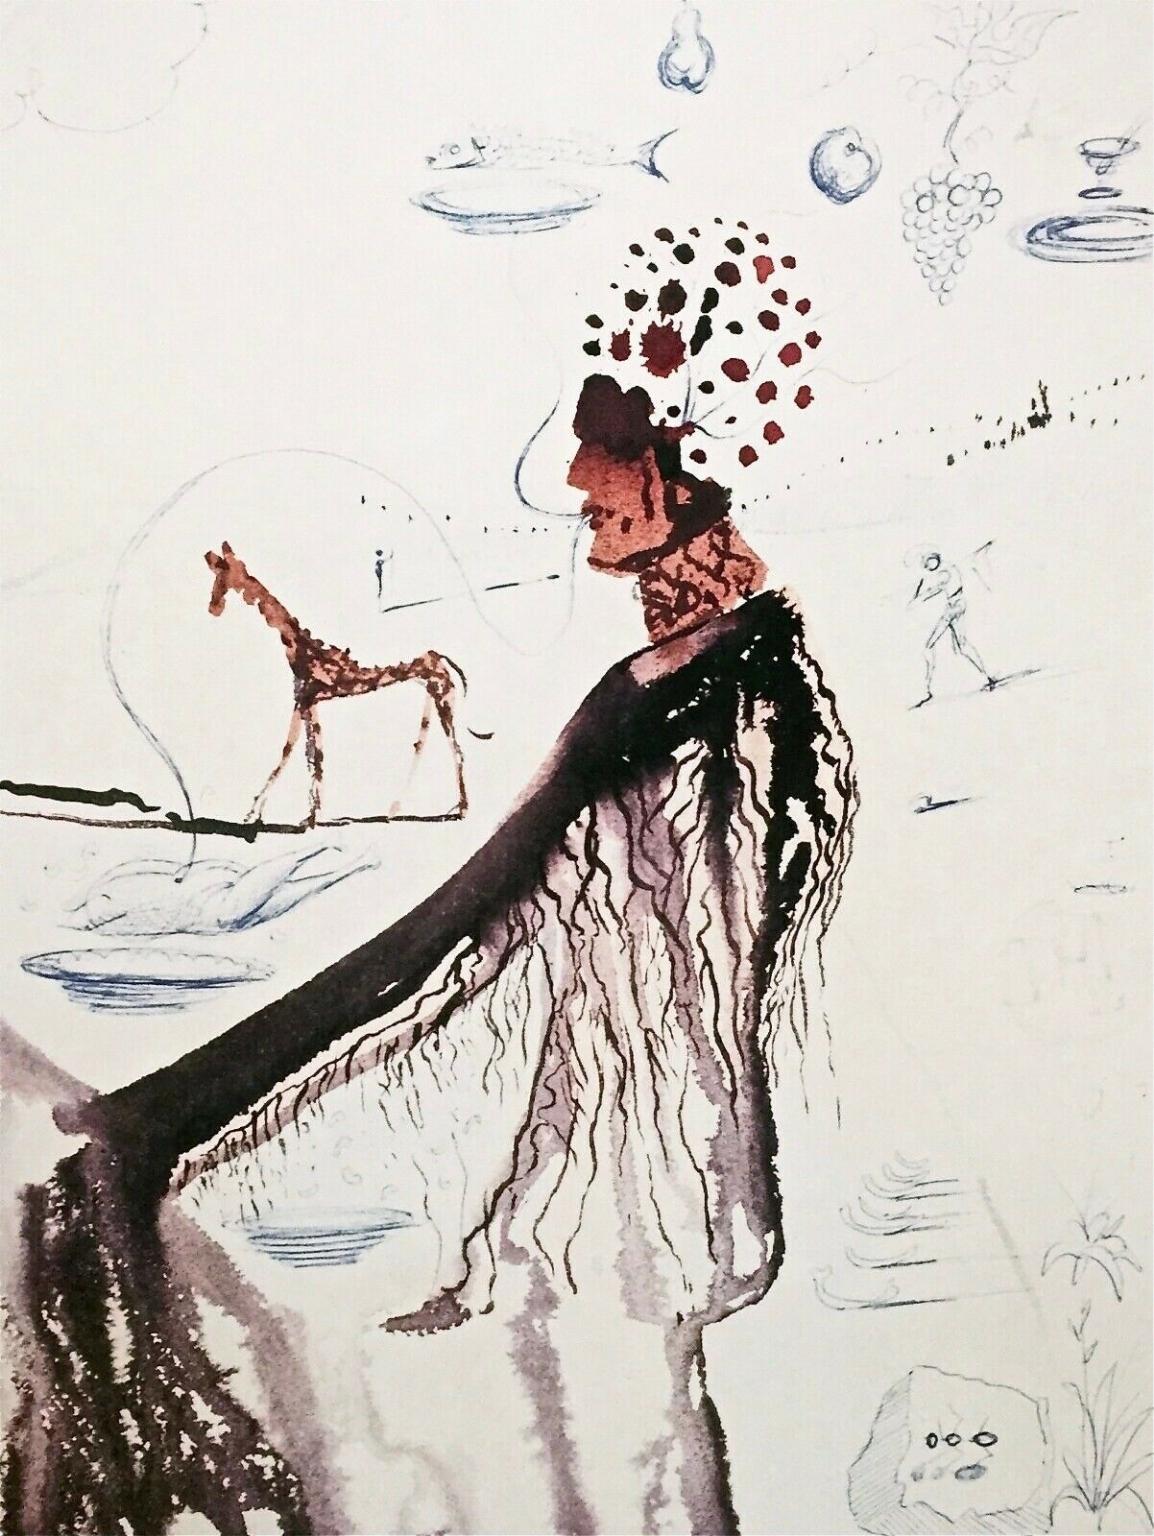 Salvador Dalí Figurative Print - The Entrepreneur, 1989 Limited Edition Lithograph, Salvador Dali - 1st Edition